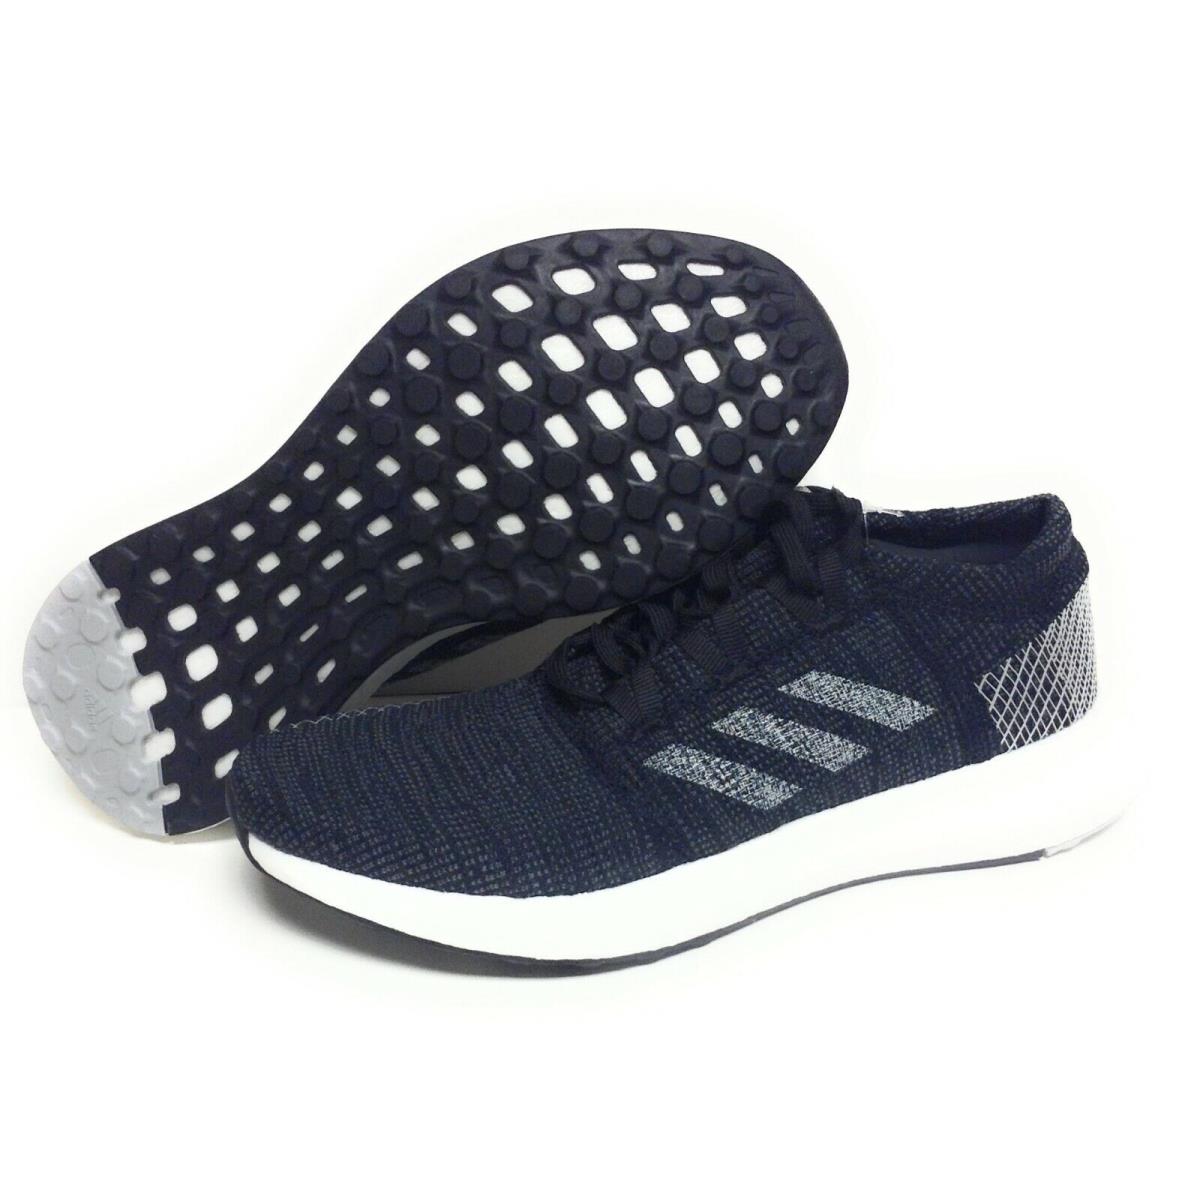 Mens Adidas Pureboost Go B37803 Black White Running Sneakers Shoes - Black , Black Manufacturer